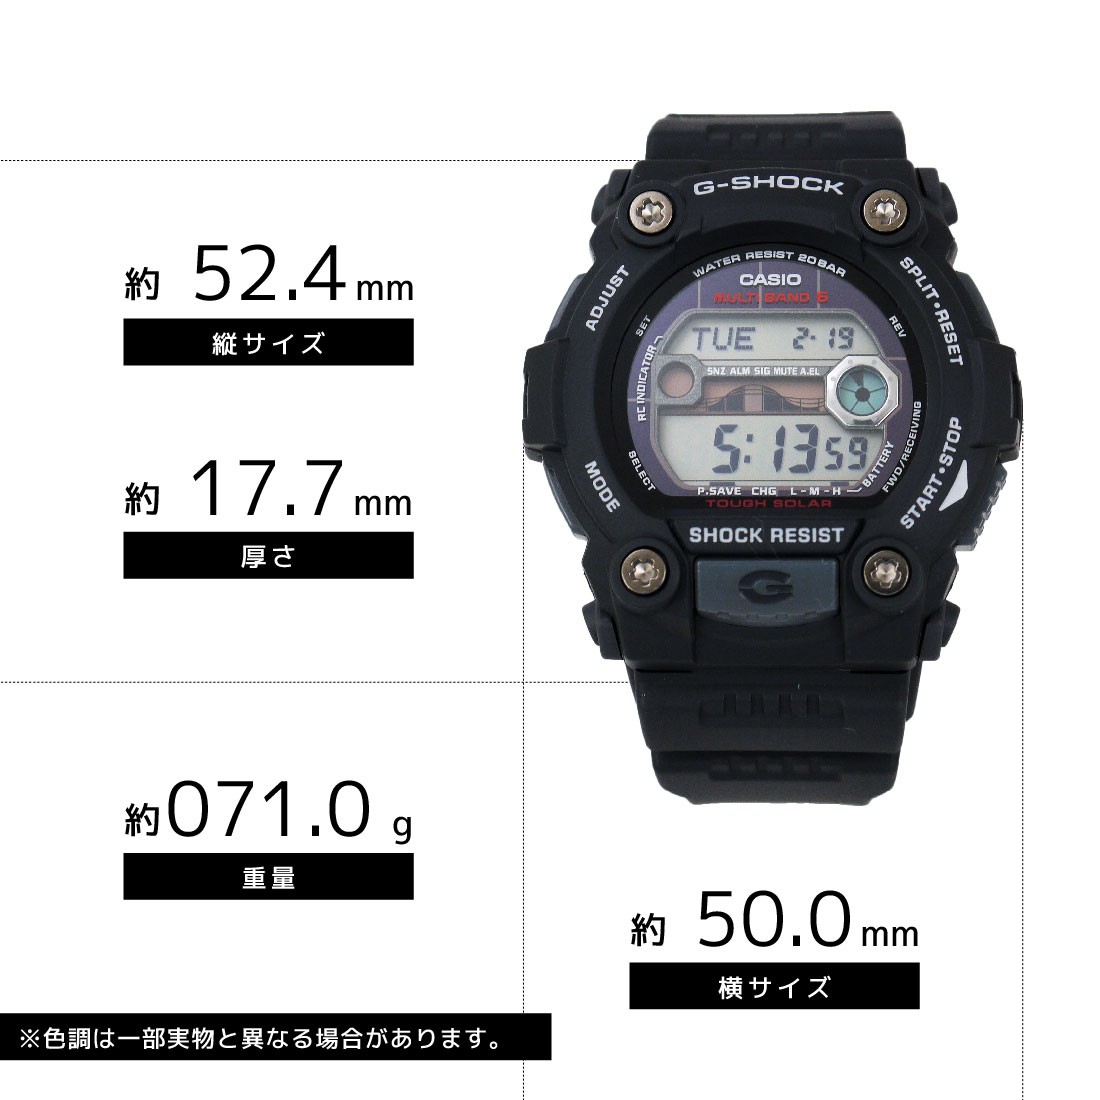 CASIO カシオ 腕時計 G-SHOCK ジーショック Gショック タイドグラフ搭載 タフソーラーX世界6局電波時計 GW-7900-1 海外モデル :GW-7900-1:腕時計ショップ